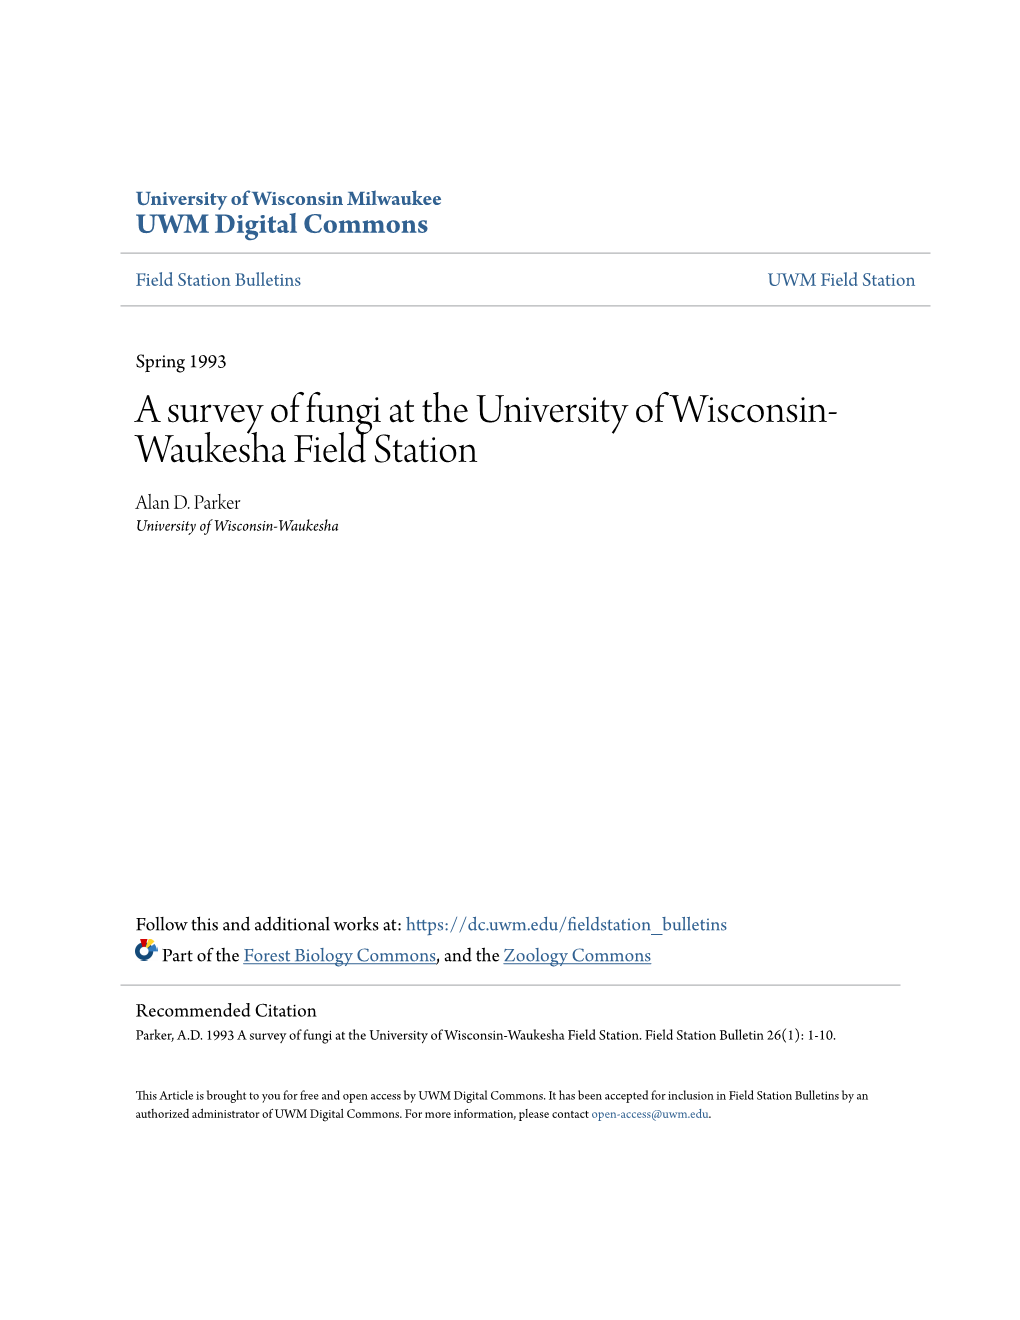 A Survey of Fungi at the University of Wisconsin-Waukesha Field Station